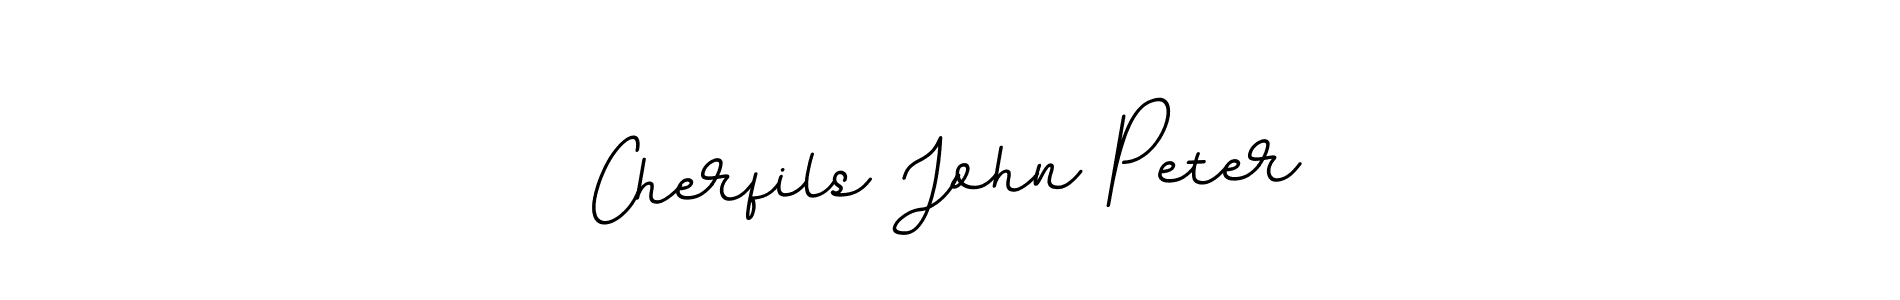 How to Draw Cherfils John Peter signature style? BallpointsItalic-DORy9 is a latest design signature styles for name Cherfils John Peter. Cherfils John Peter signature style 11 images and pictures png